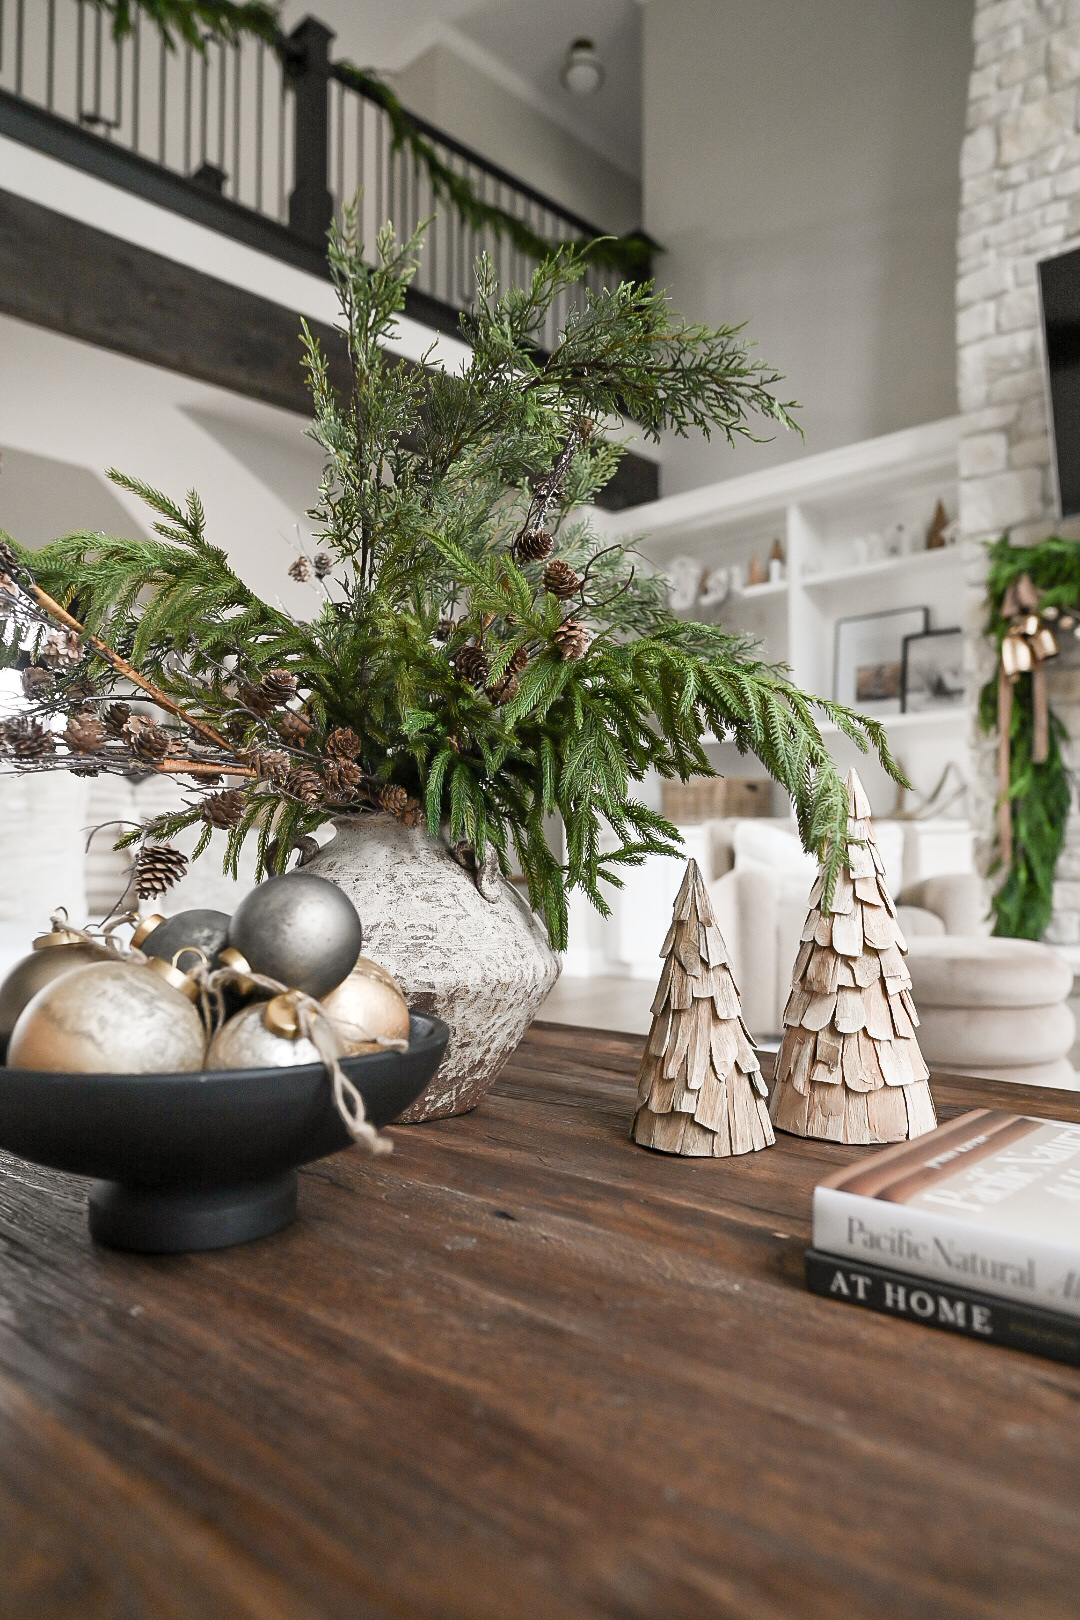 jordyn's holiday favorites | #holiday #favorites #seasonaldecor #christmas #christmasdecor #holidaydecor #holidayhouse #fauxbranch #vase #ornaments